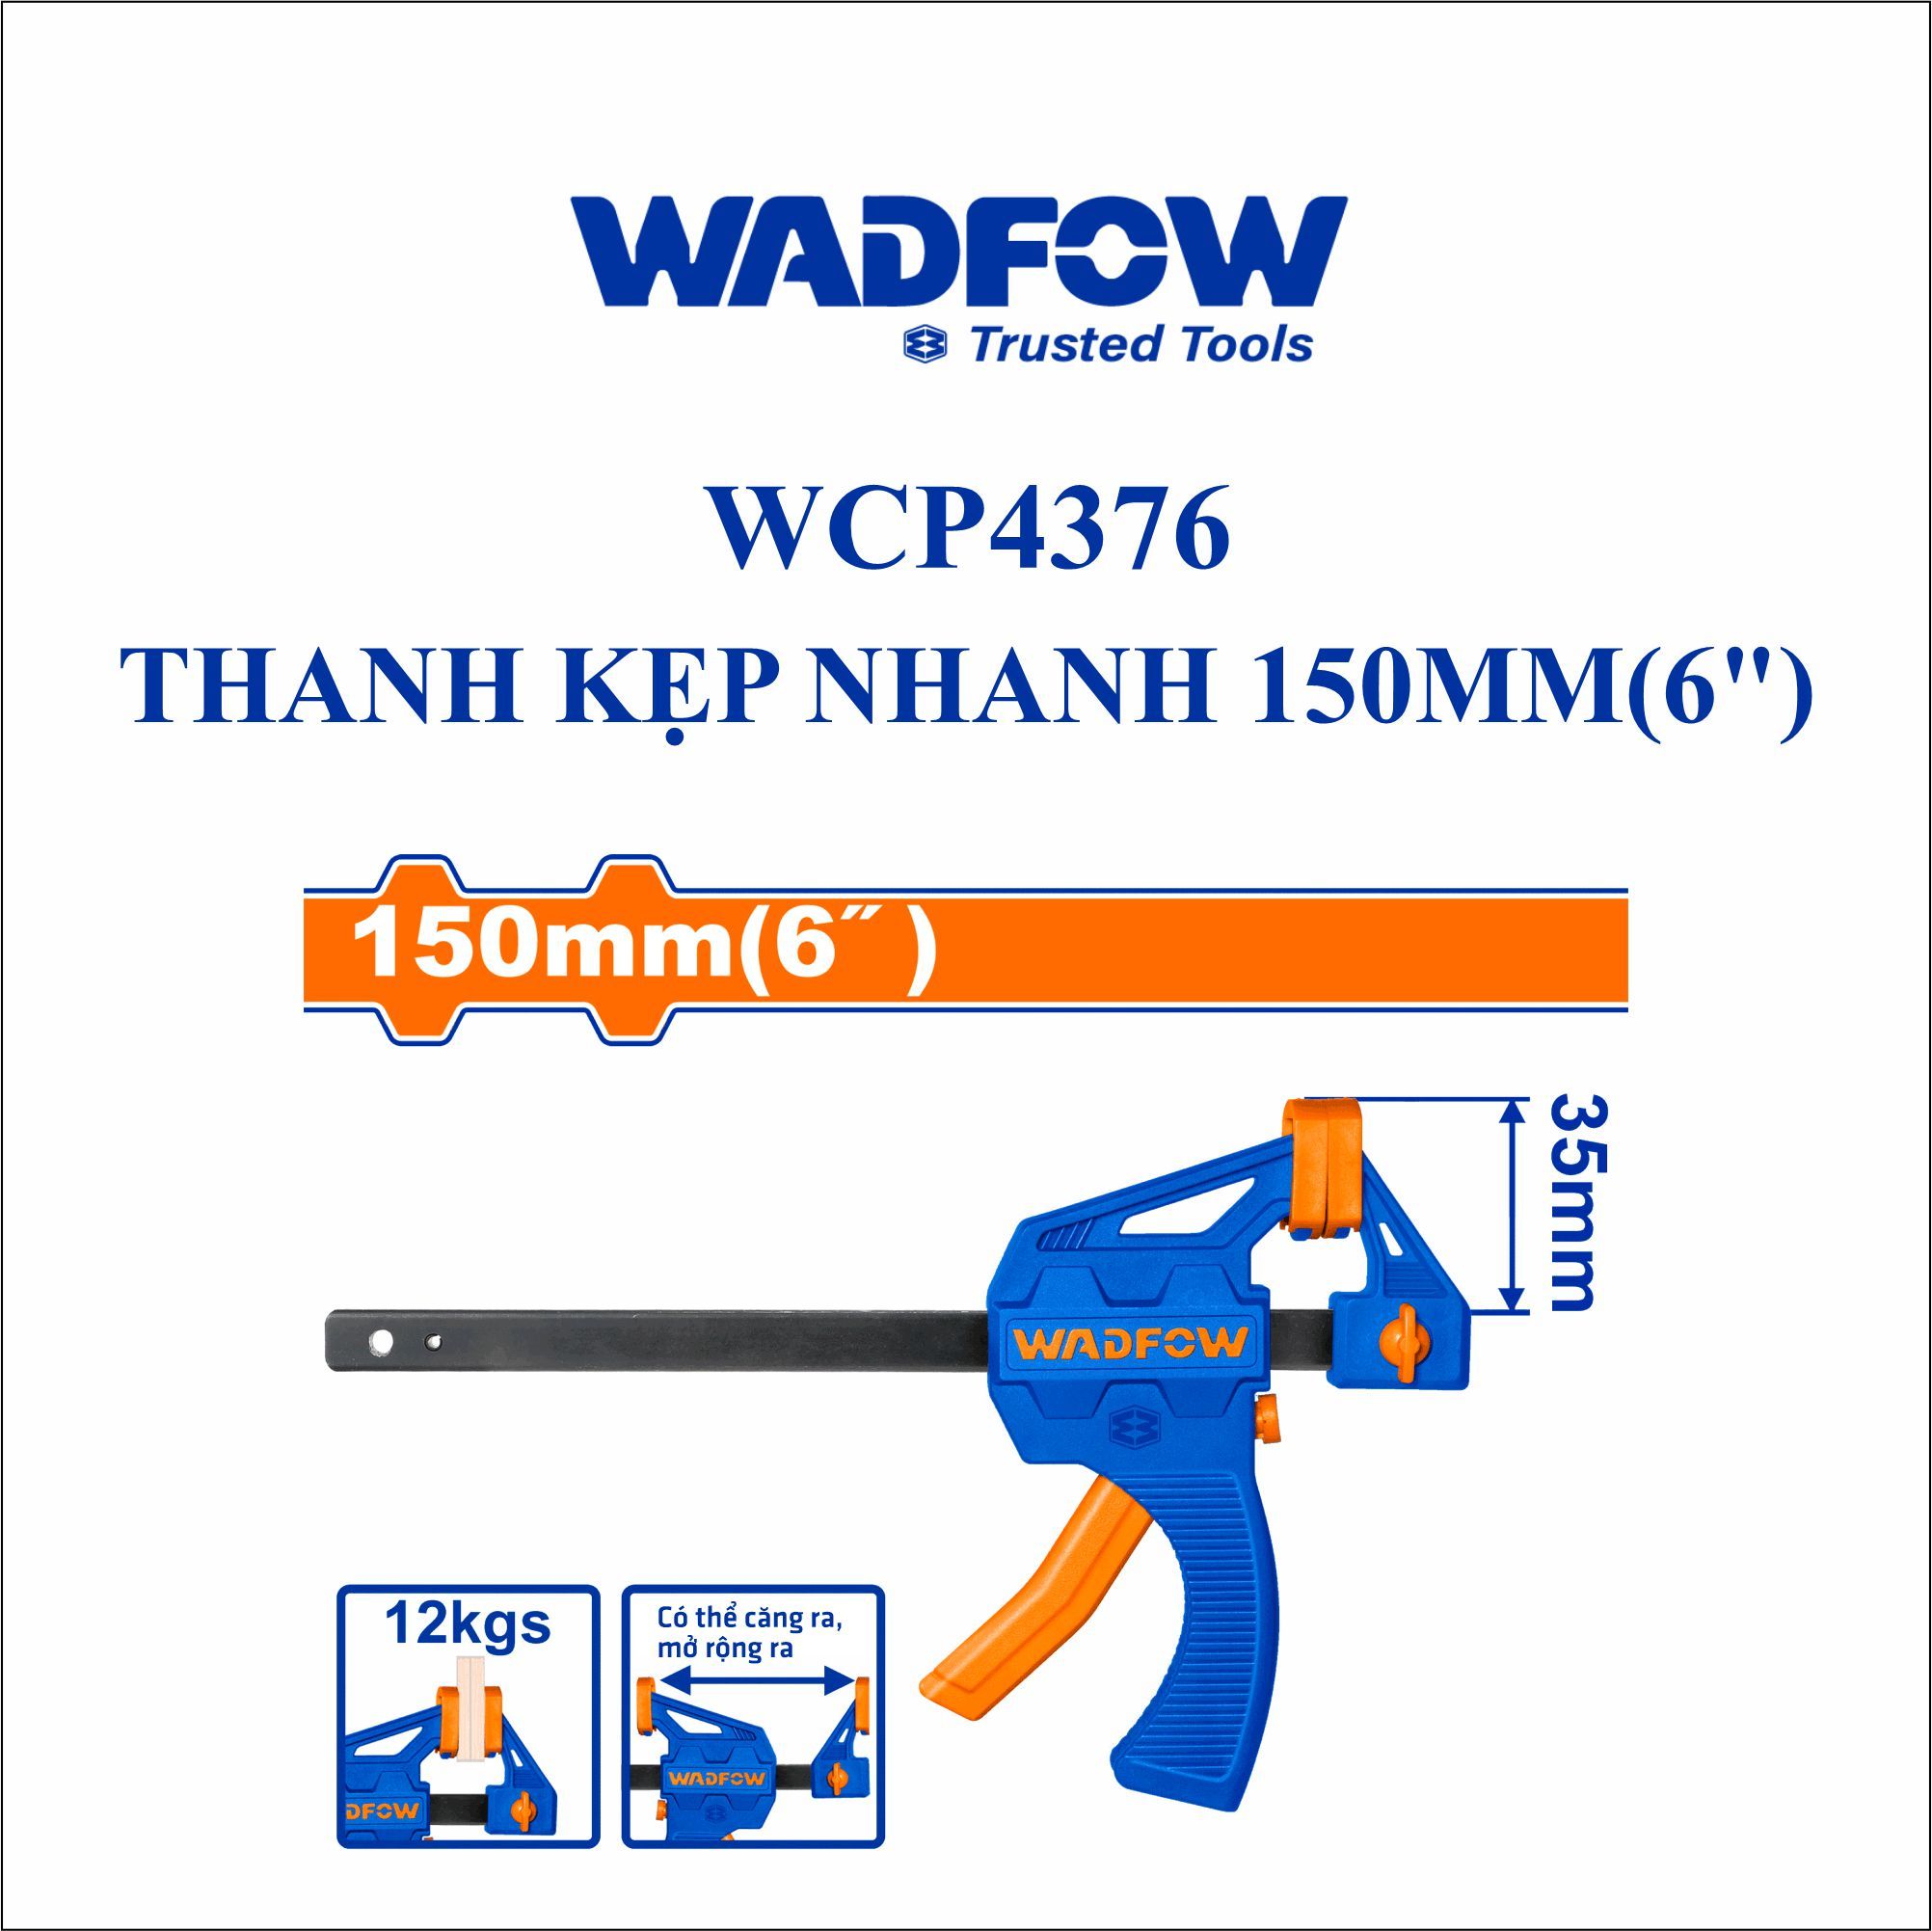  Thanh kẹp nhanh 6 Inch WADFOW WCP4376 